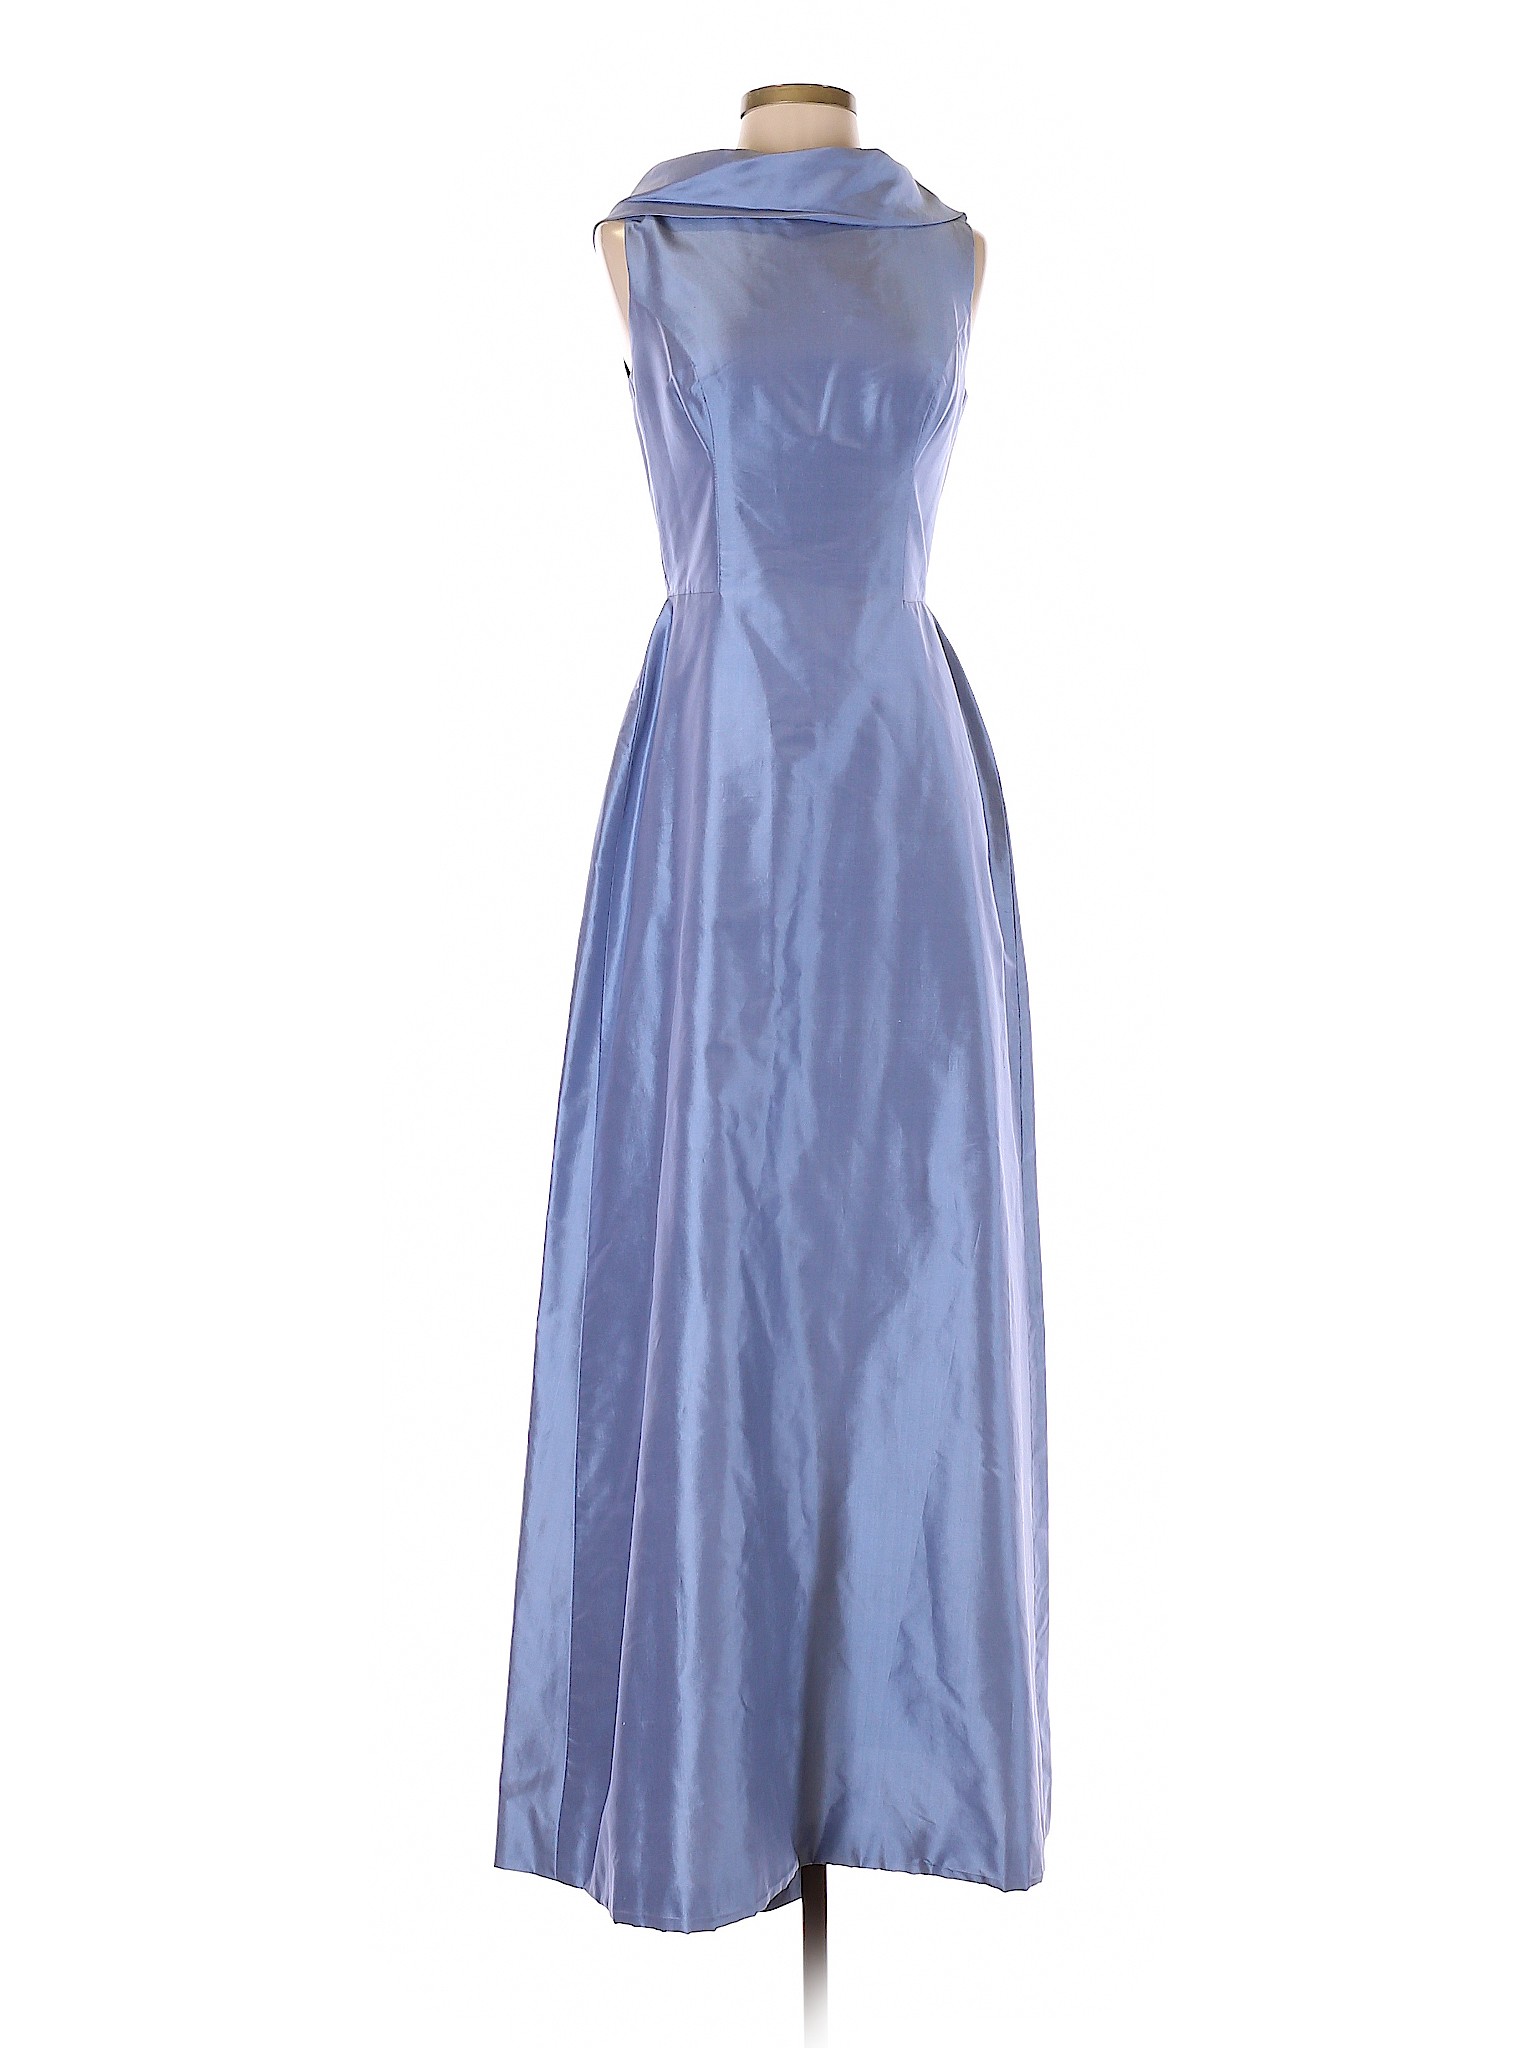 Catherine Regehr 100% Silk Solid Light Blue Cocktail Dress Size S - 77% ...